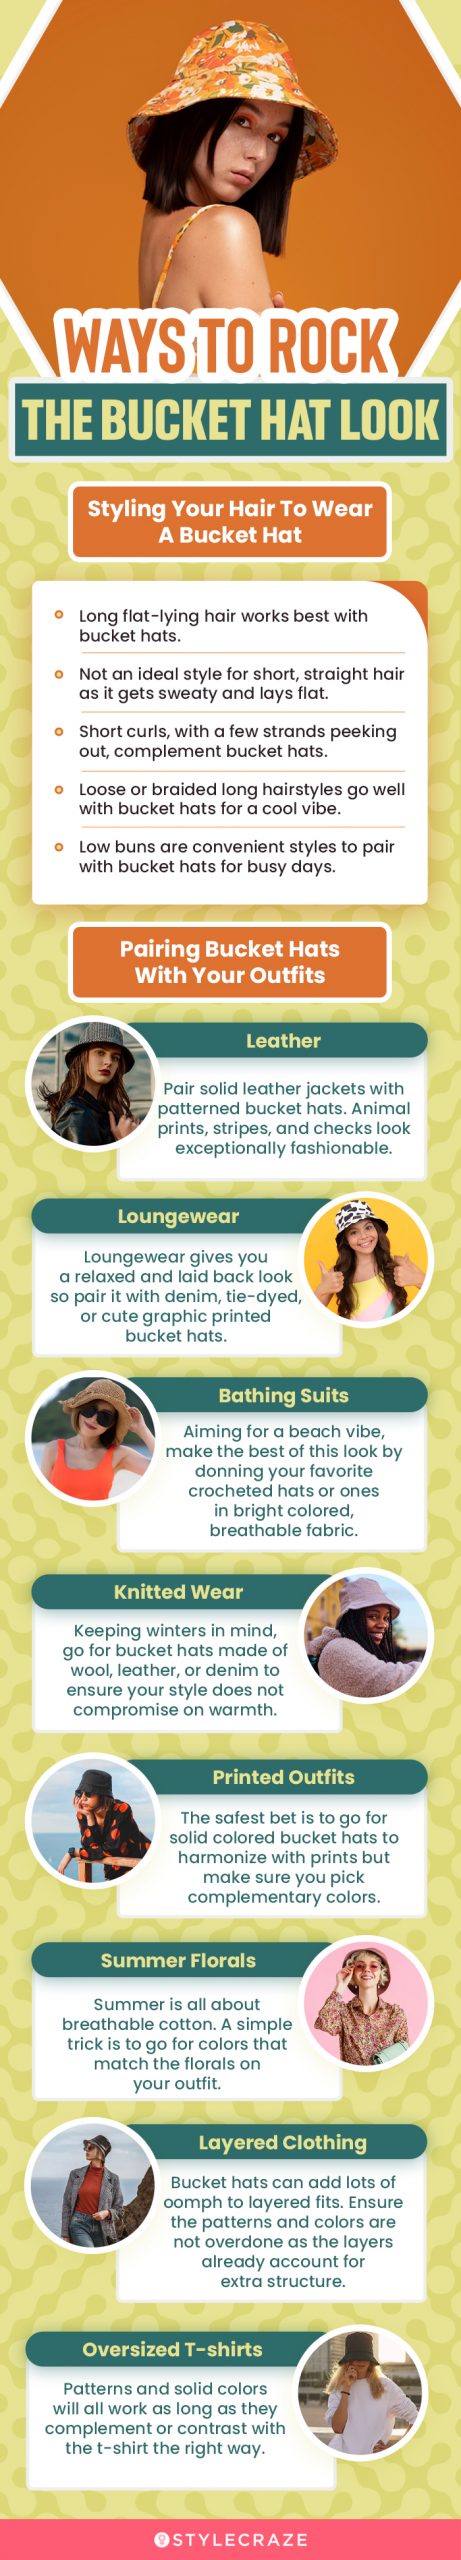 ways to rock the bucket hat look (infographic)